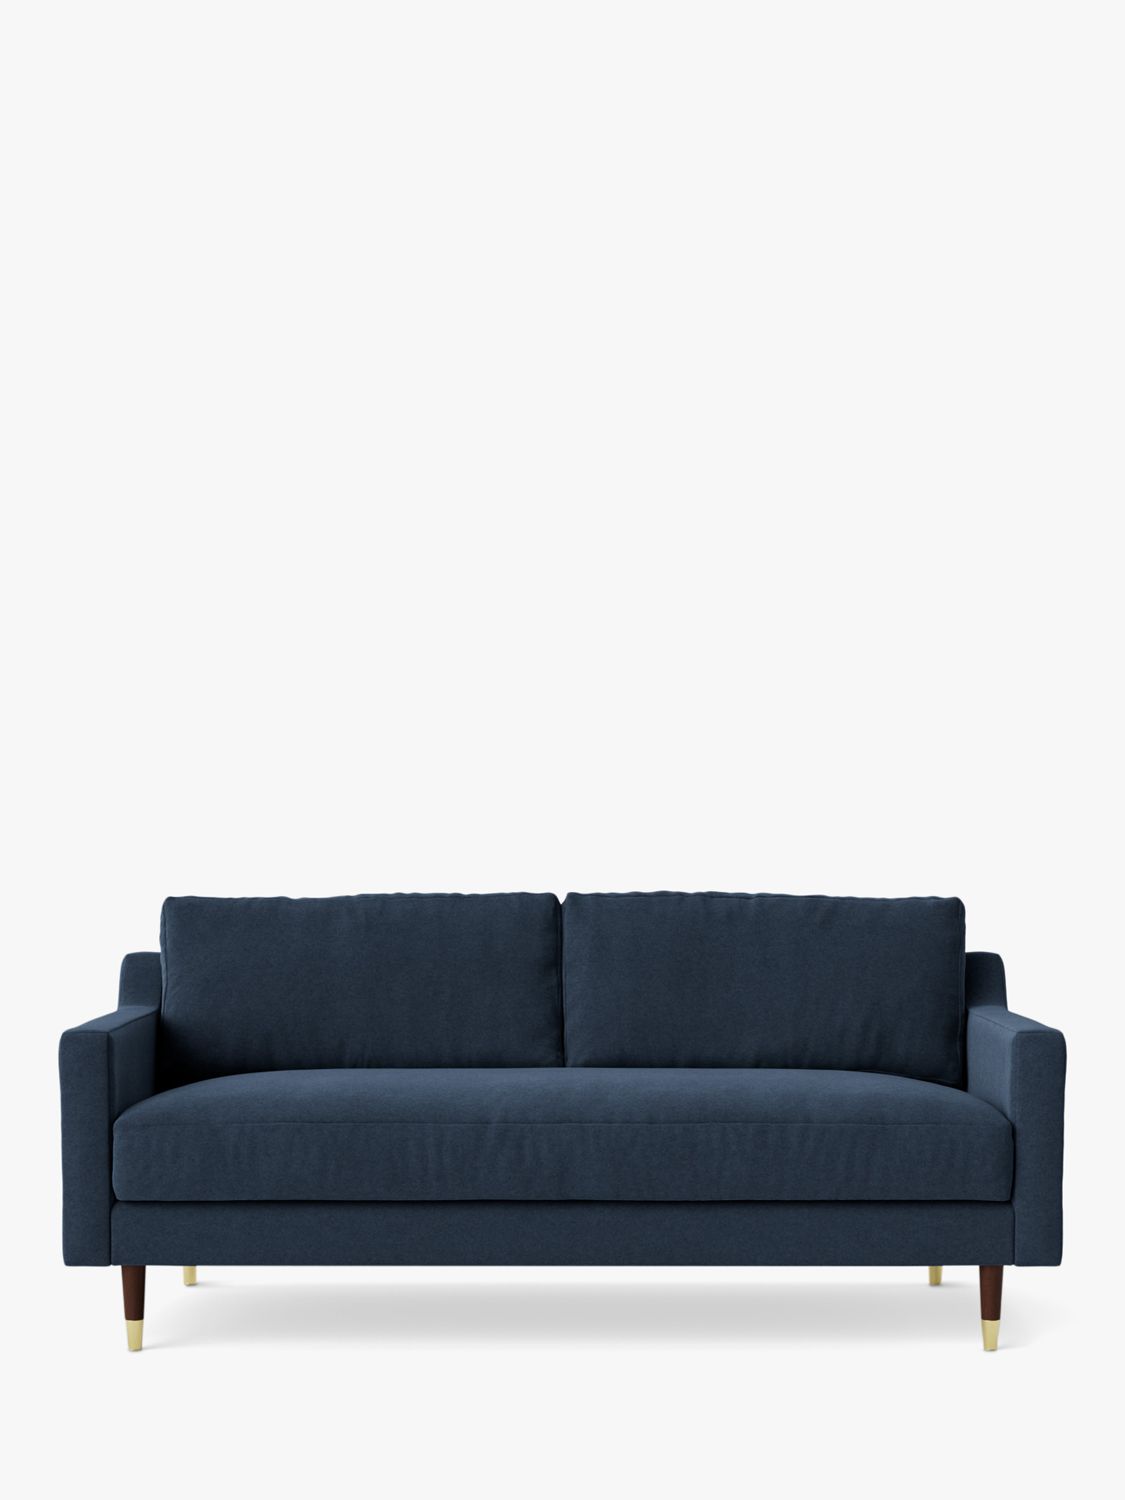 Swoon Rieti Medium 2 Seater Sofa